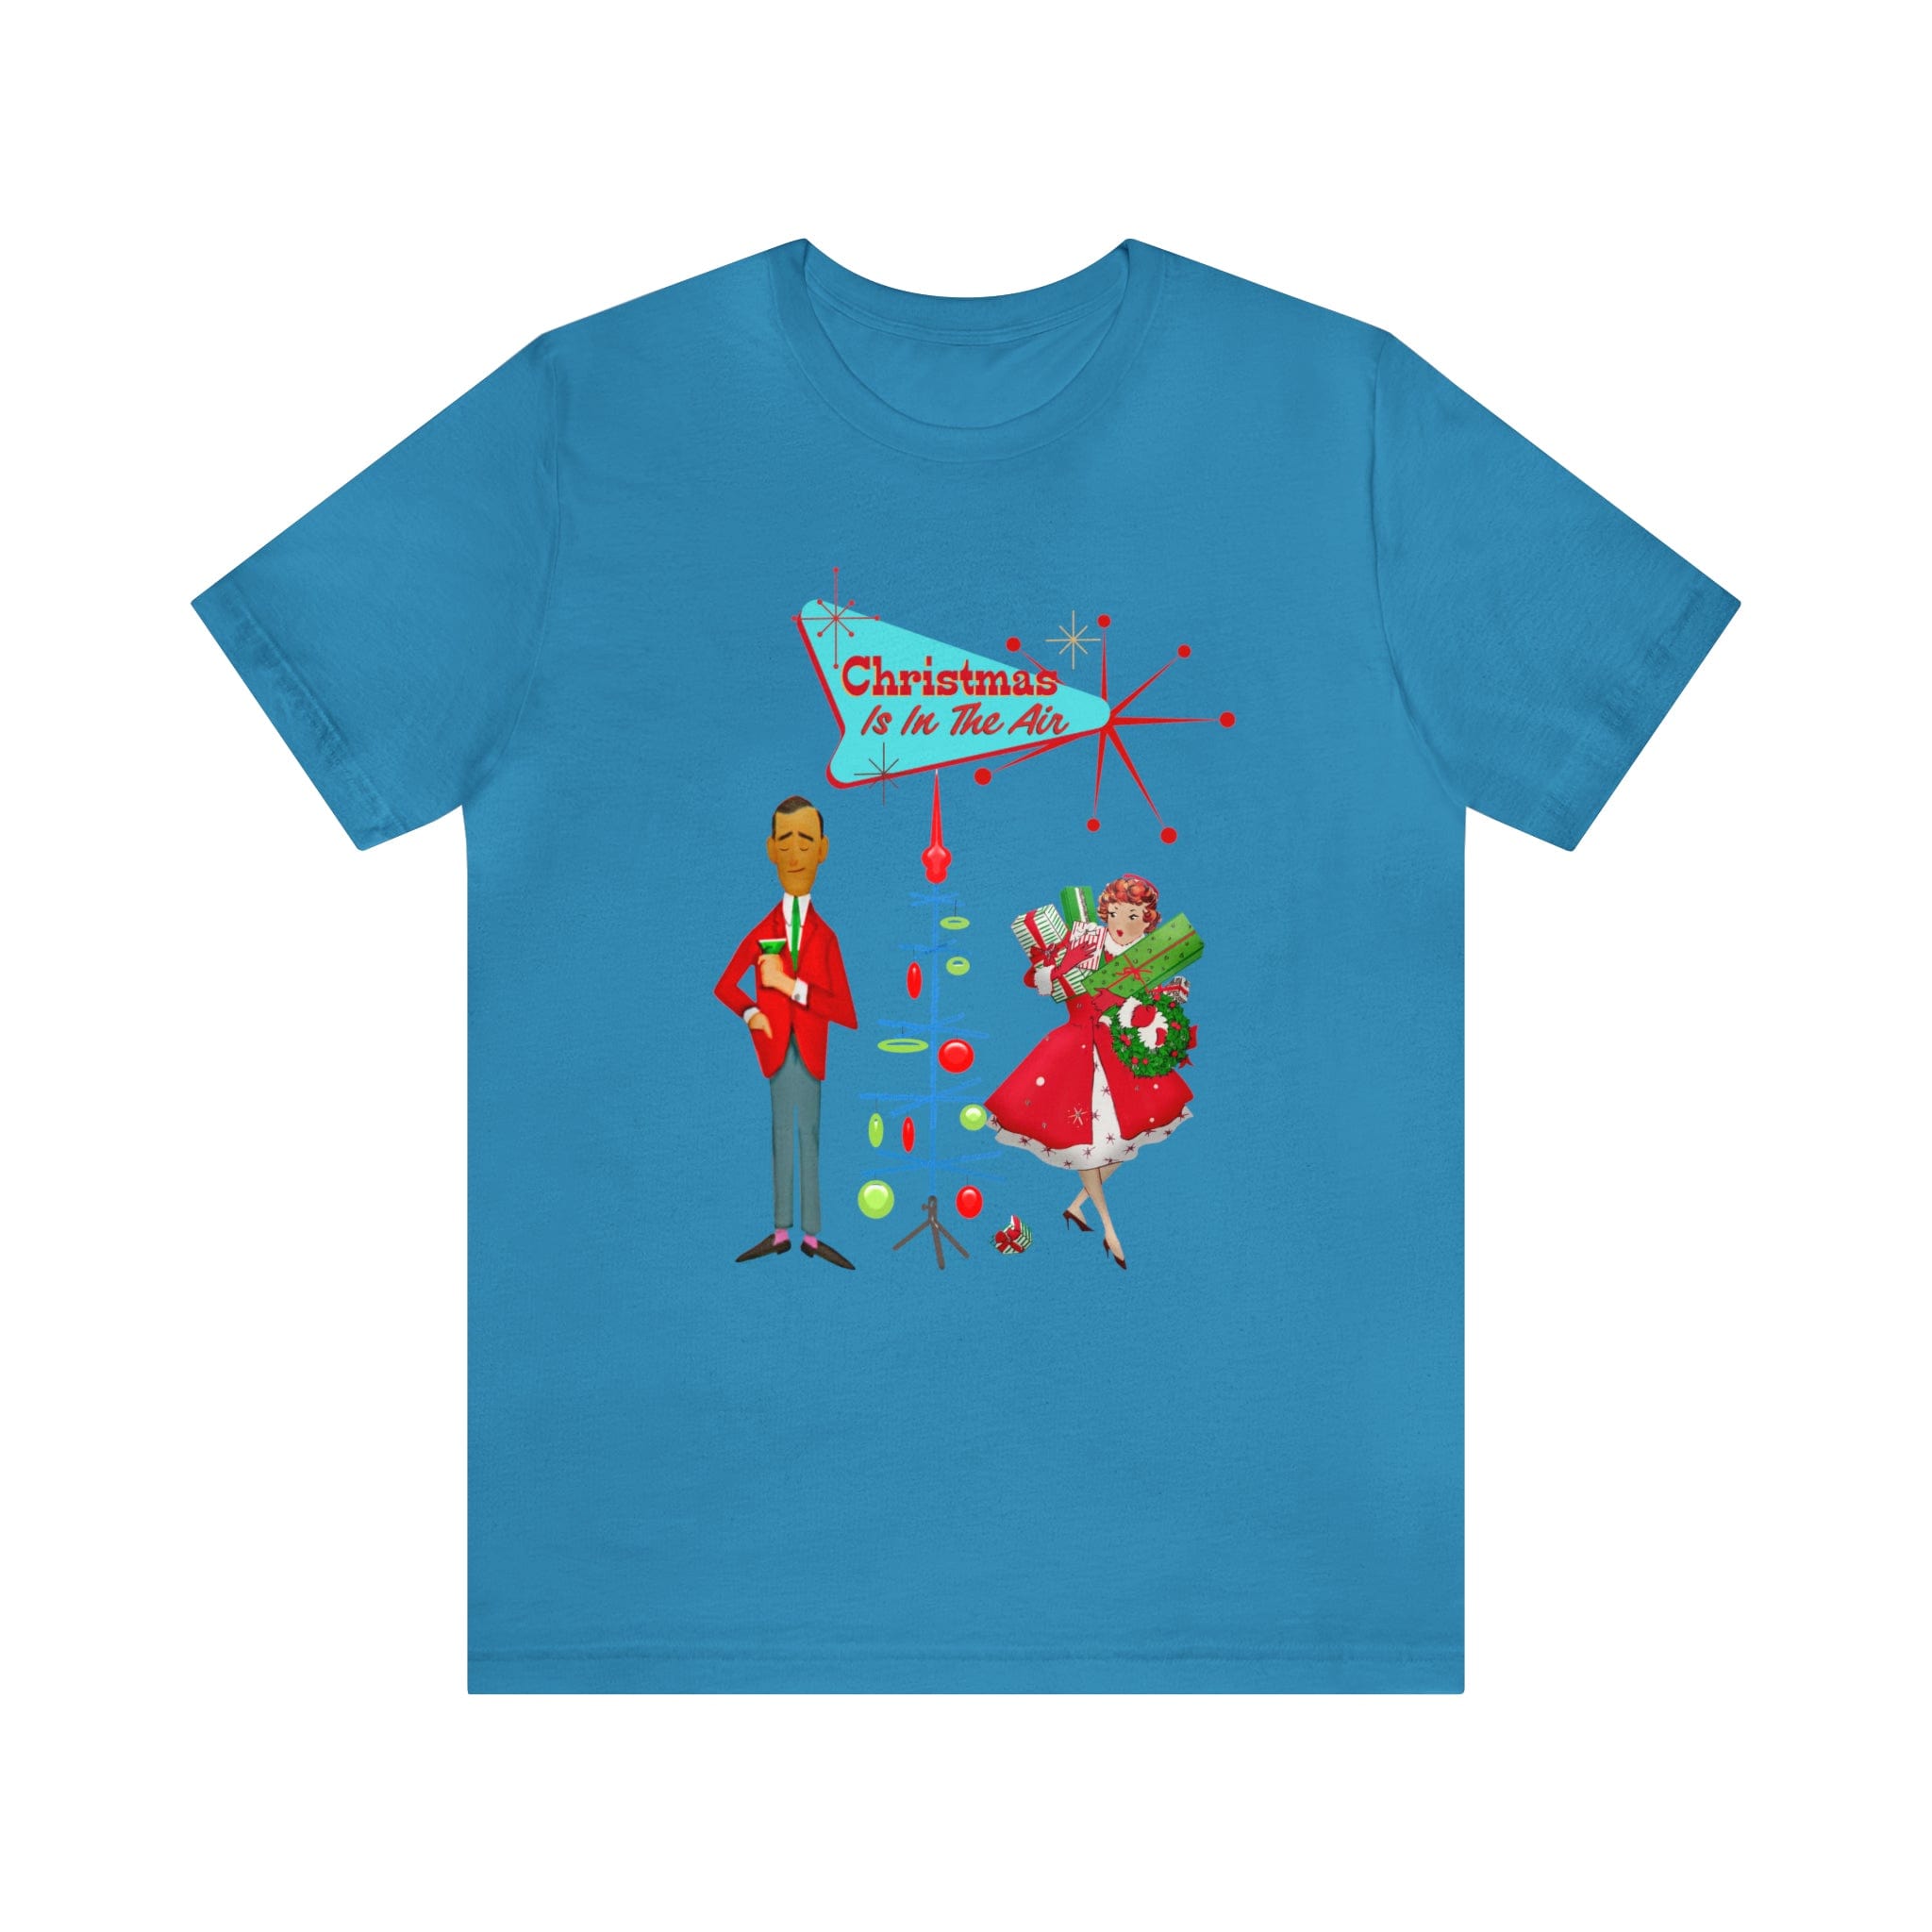 Retro Holiday, Christmas Party, Mid Century Mod, Kitschy Christmas Tee Unisex T-Shirt Aqua / S